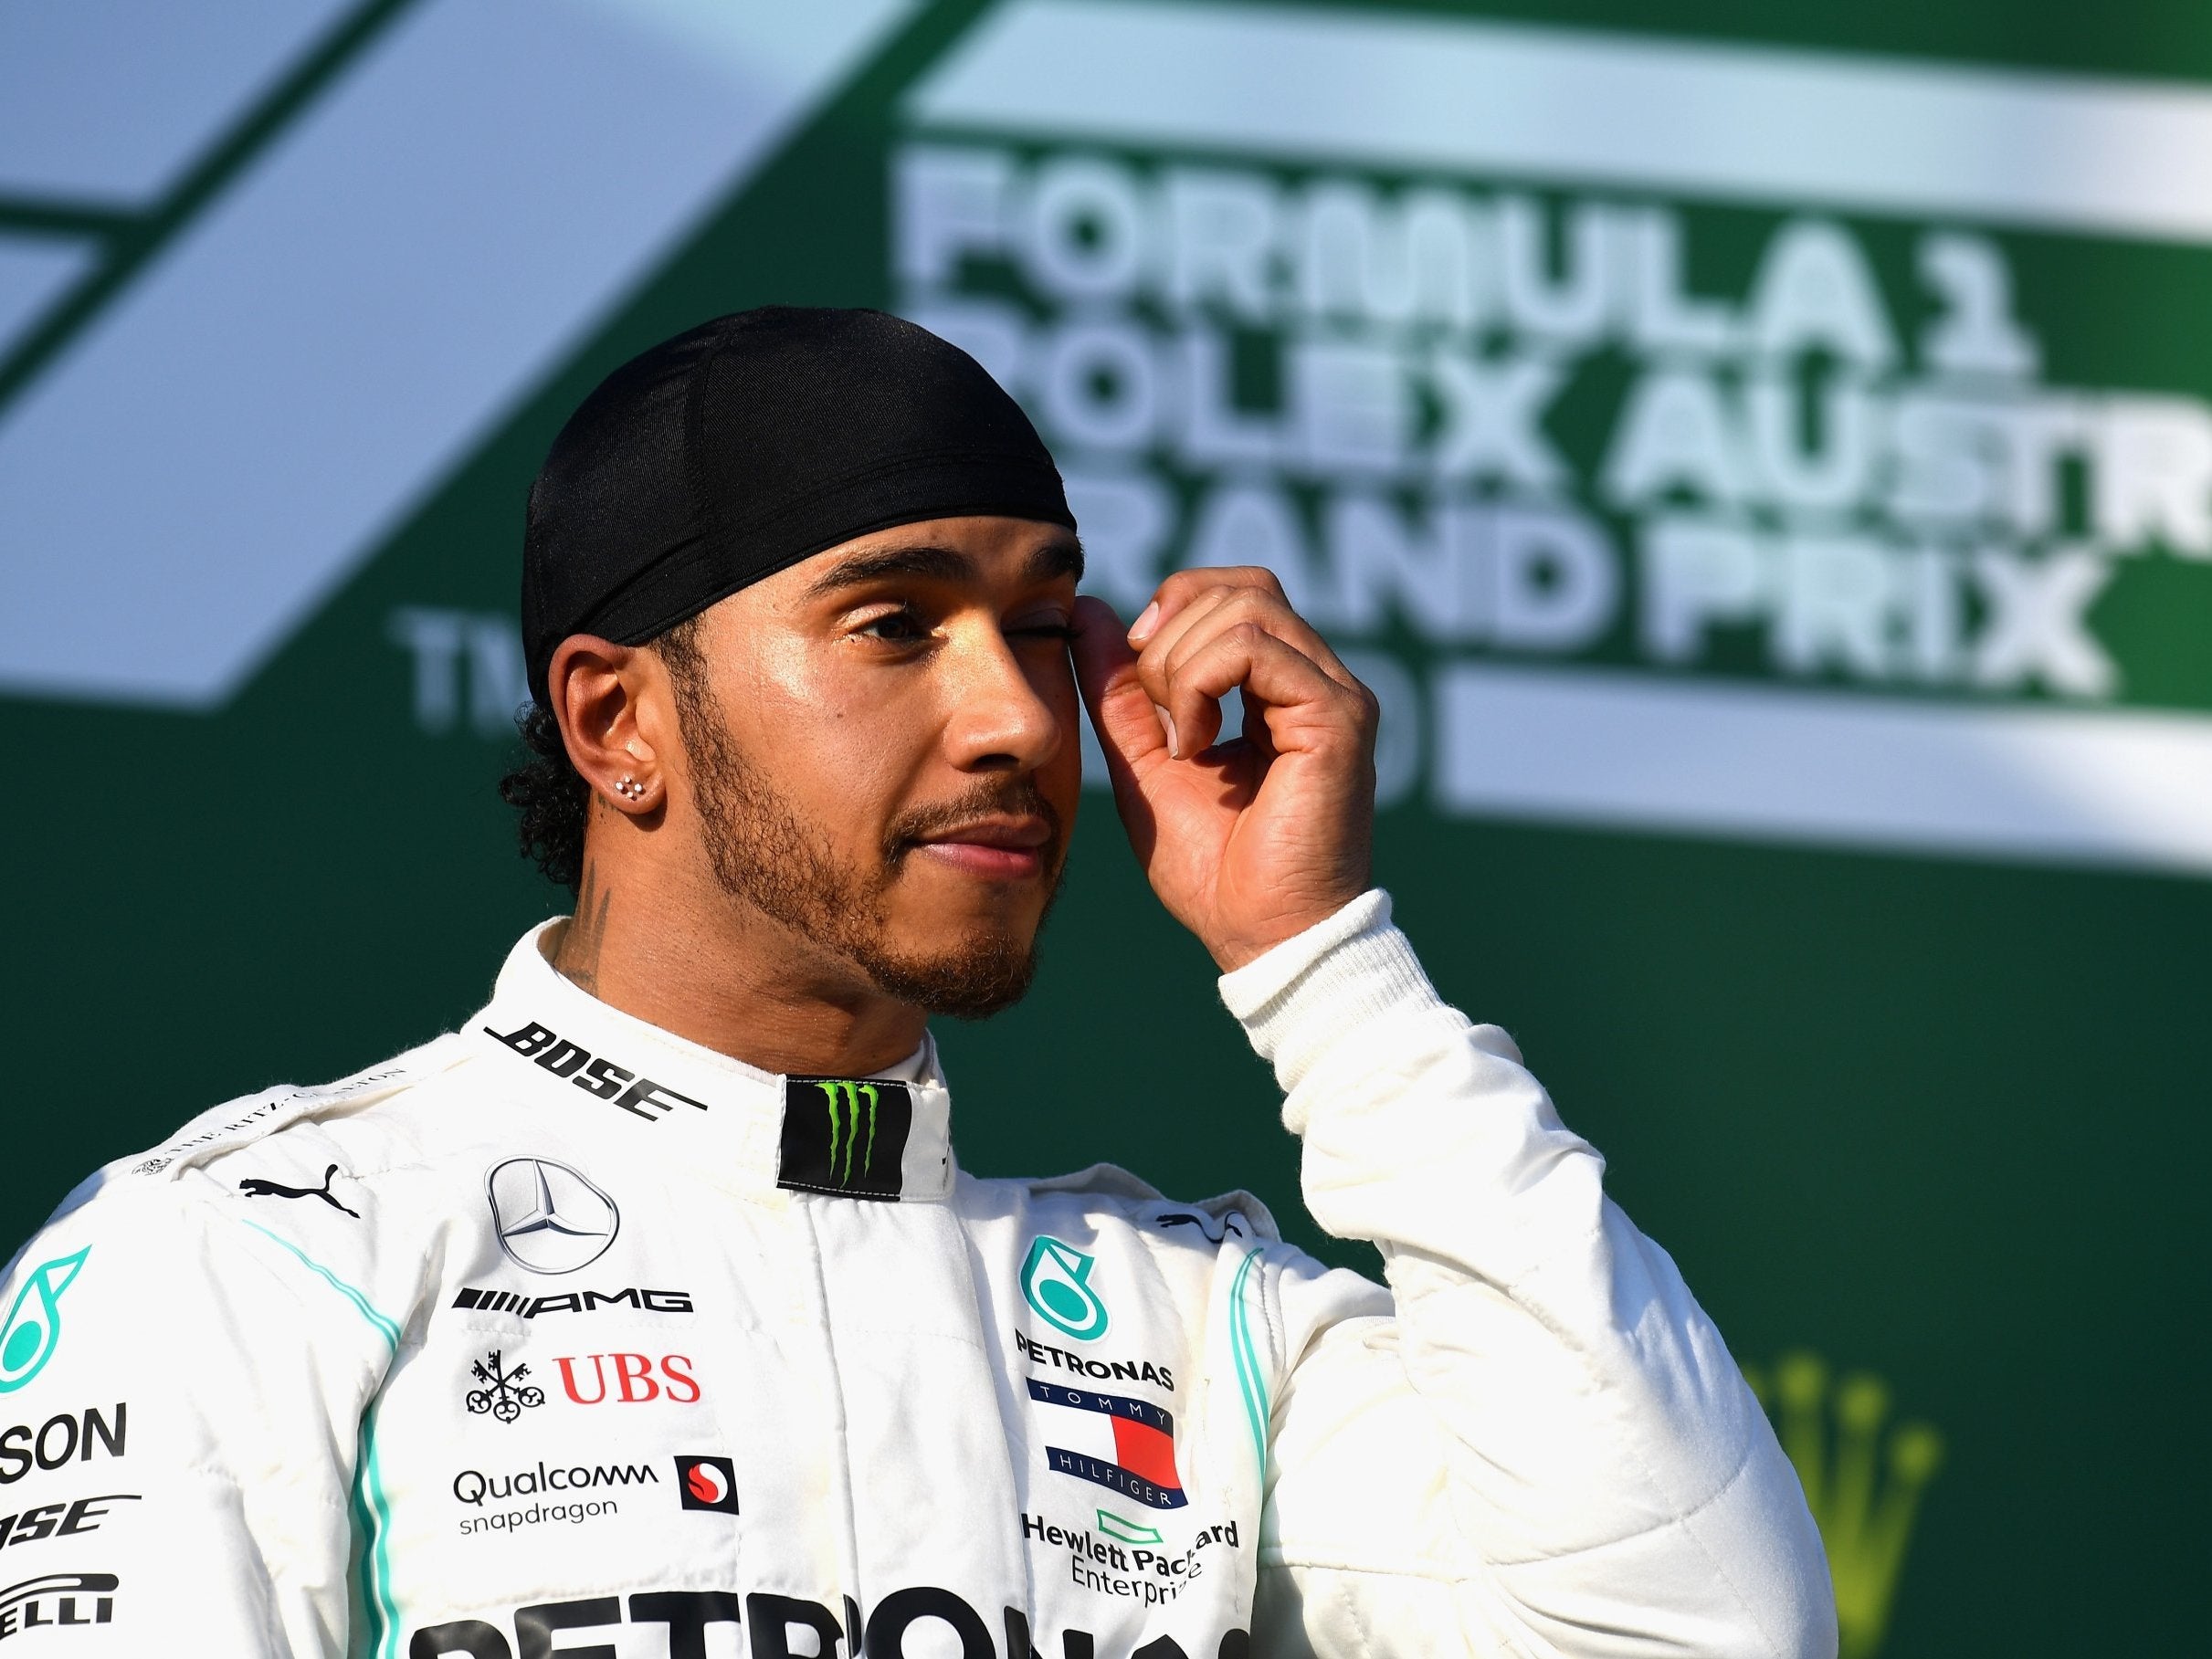 Hamilton finished second at the Australian Grand Prix